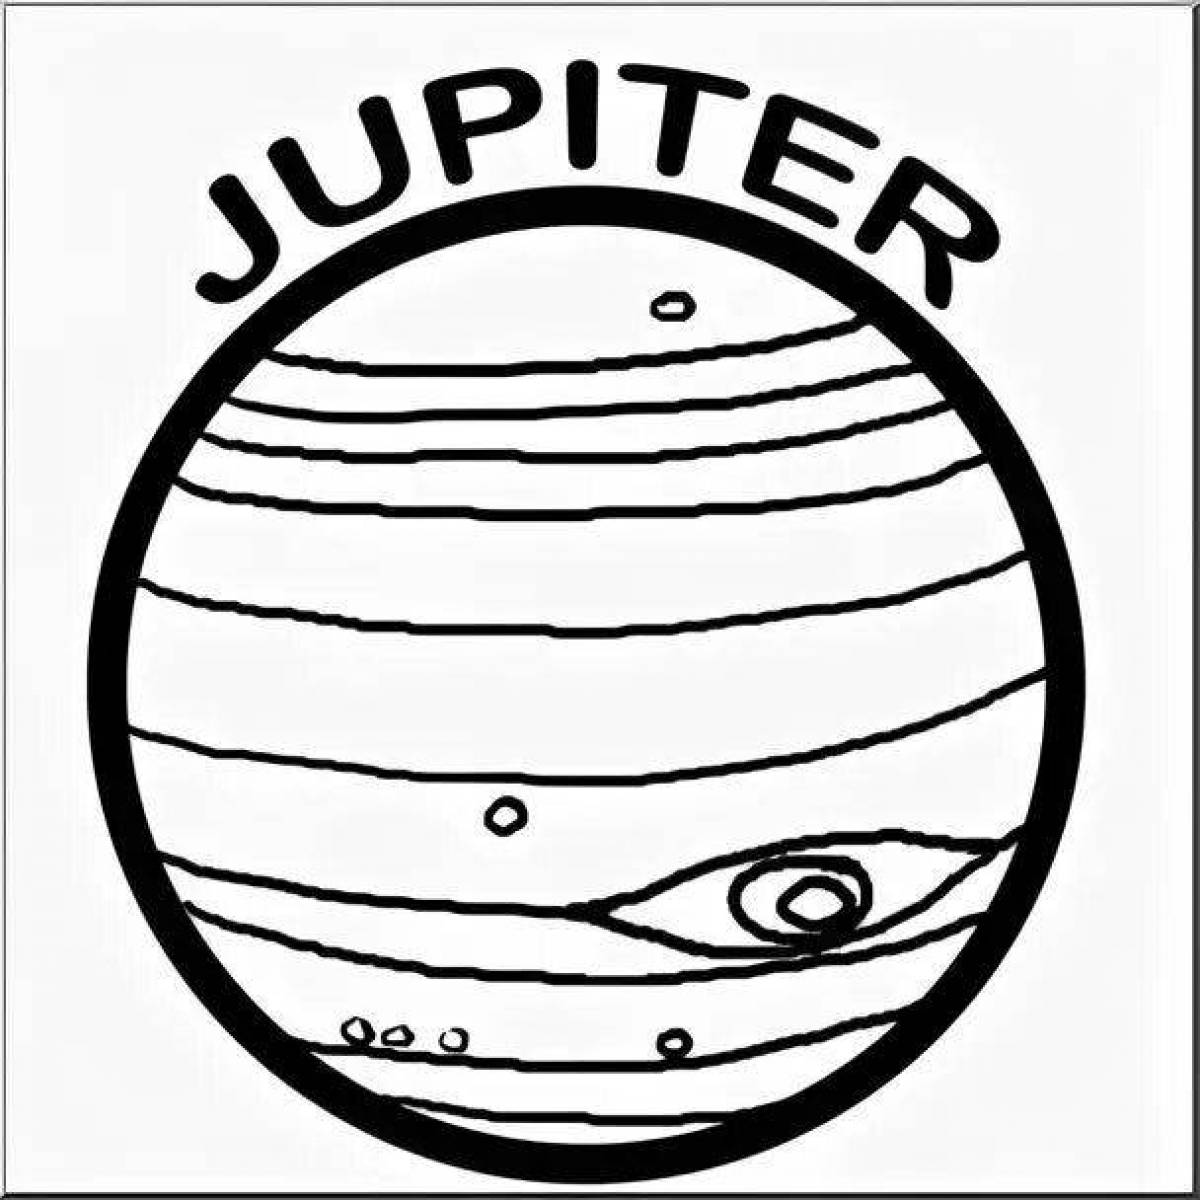 Нарисованный белым Юпитер